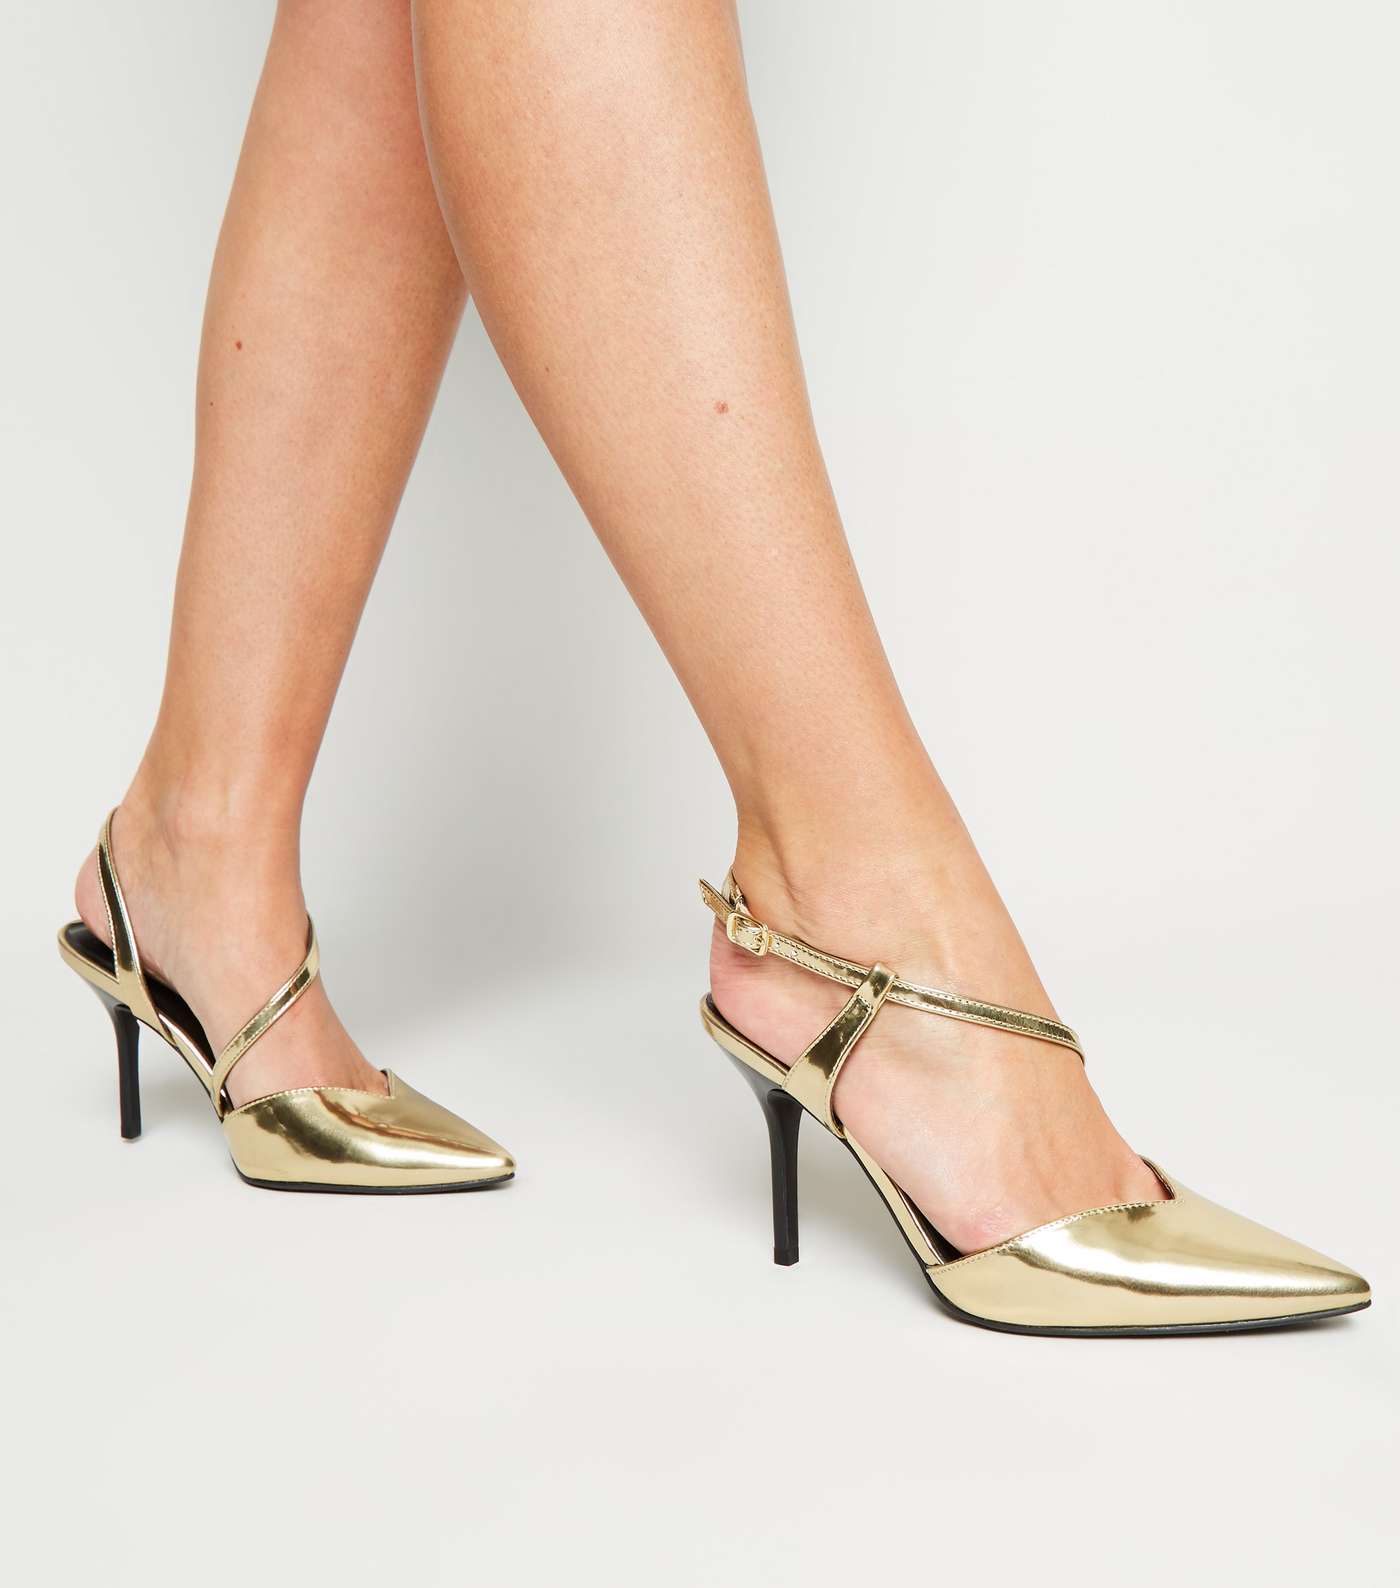 Gold Metallic Strappy Stiletto Court Shoes Image 2